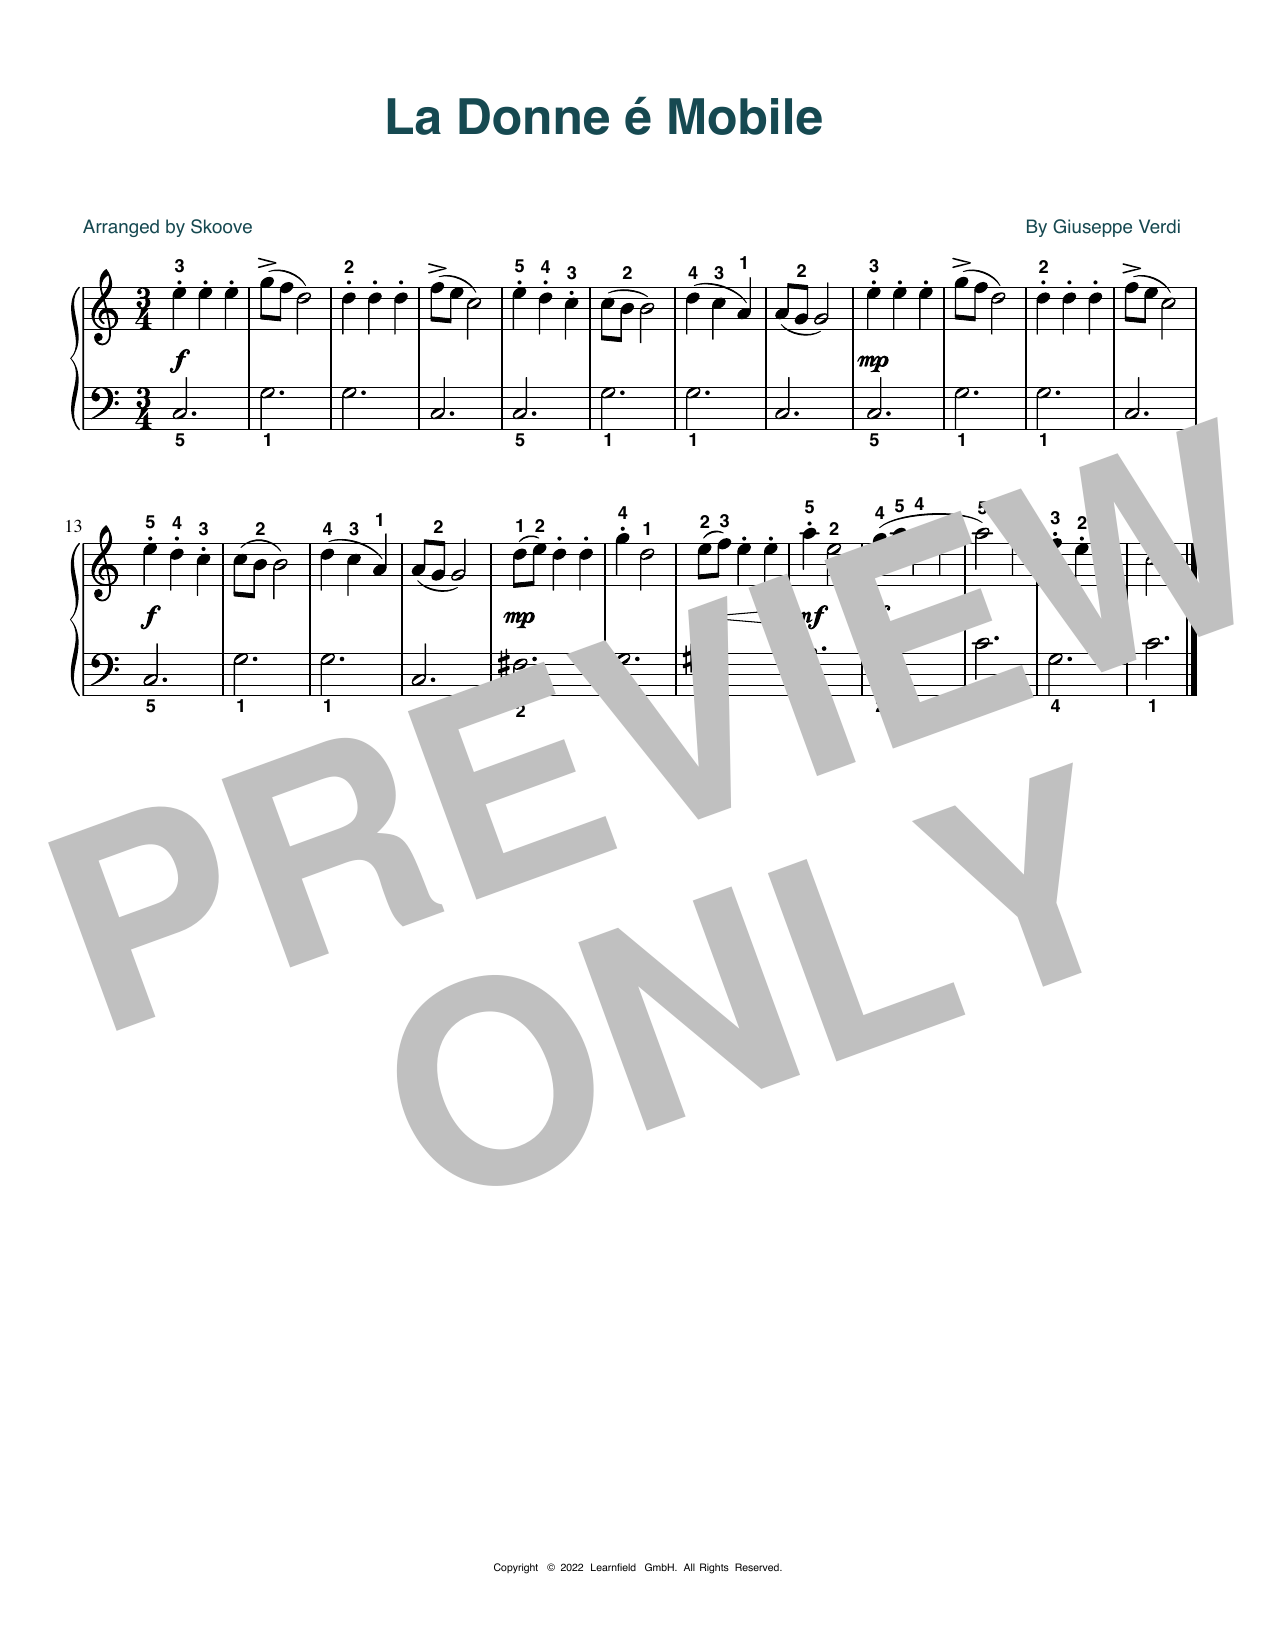 Giuseppe Verdi La Donne é Mobile (arr. Skoove) Sheet Music Notes & Chords for Beginner Piano (Abridged) - Download or Print PDF